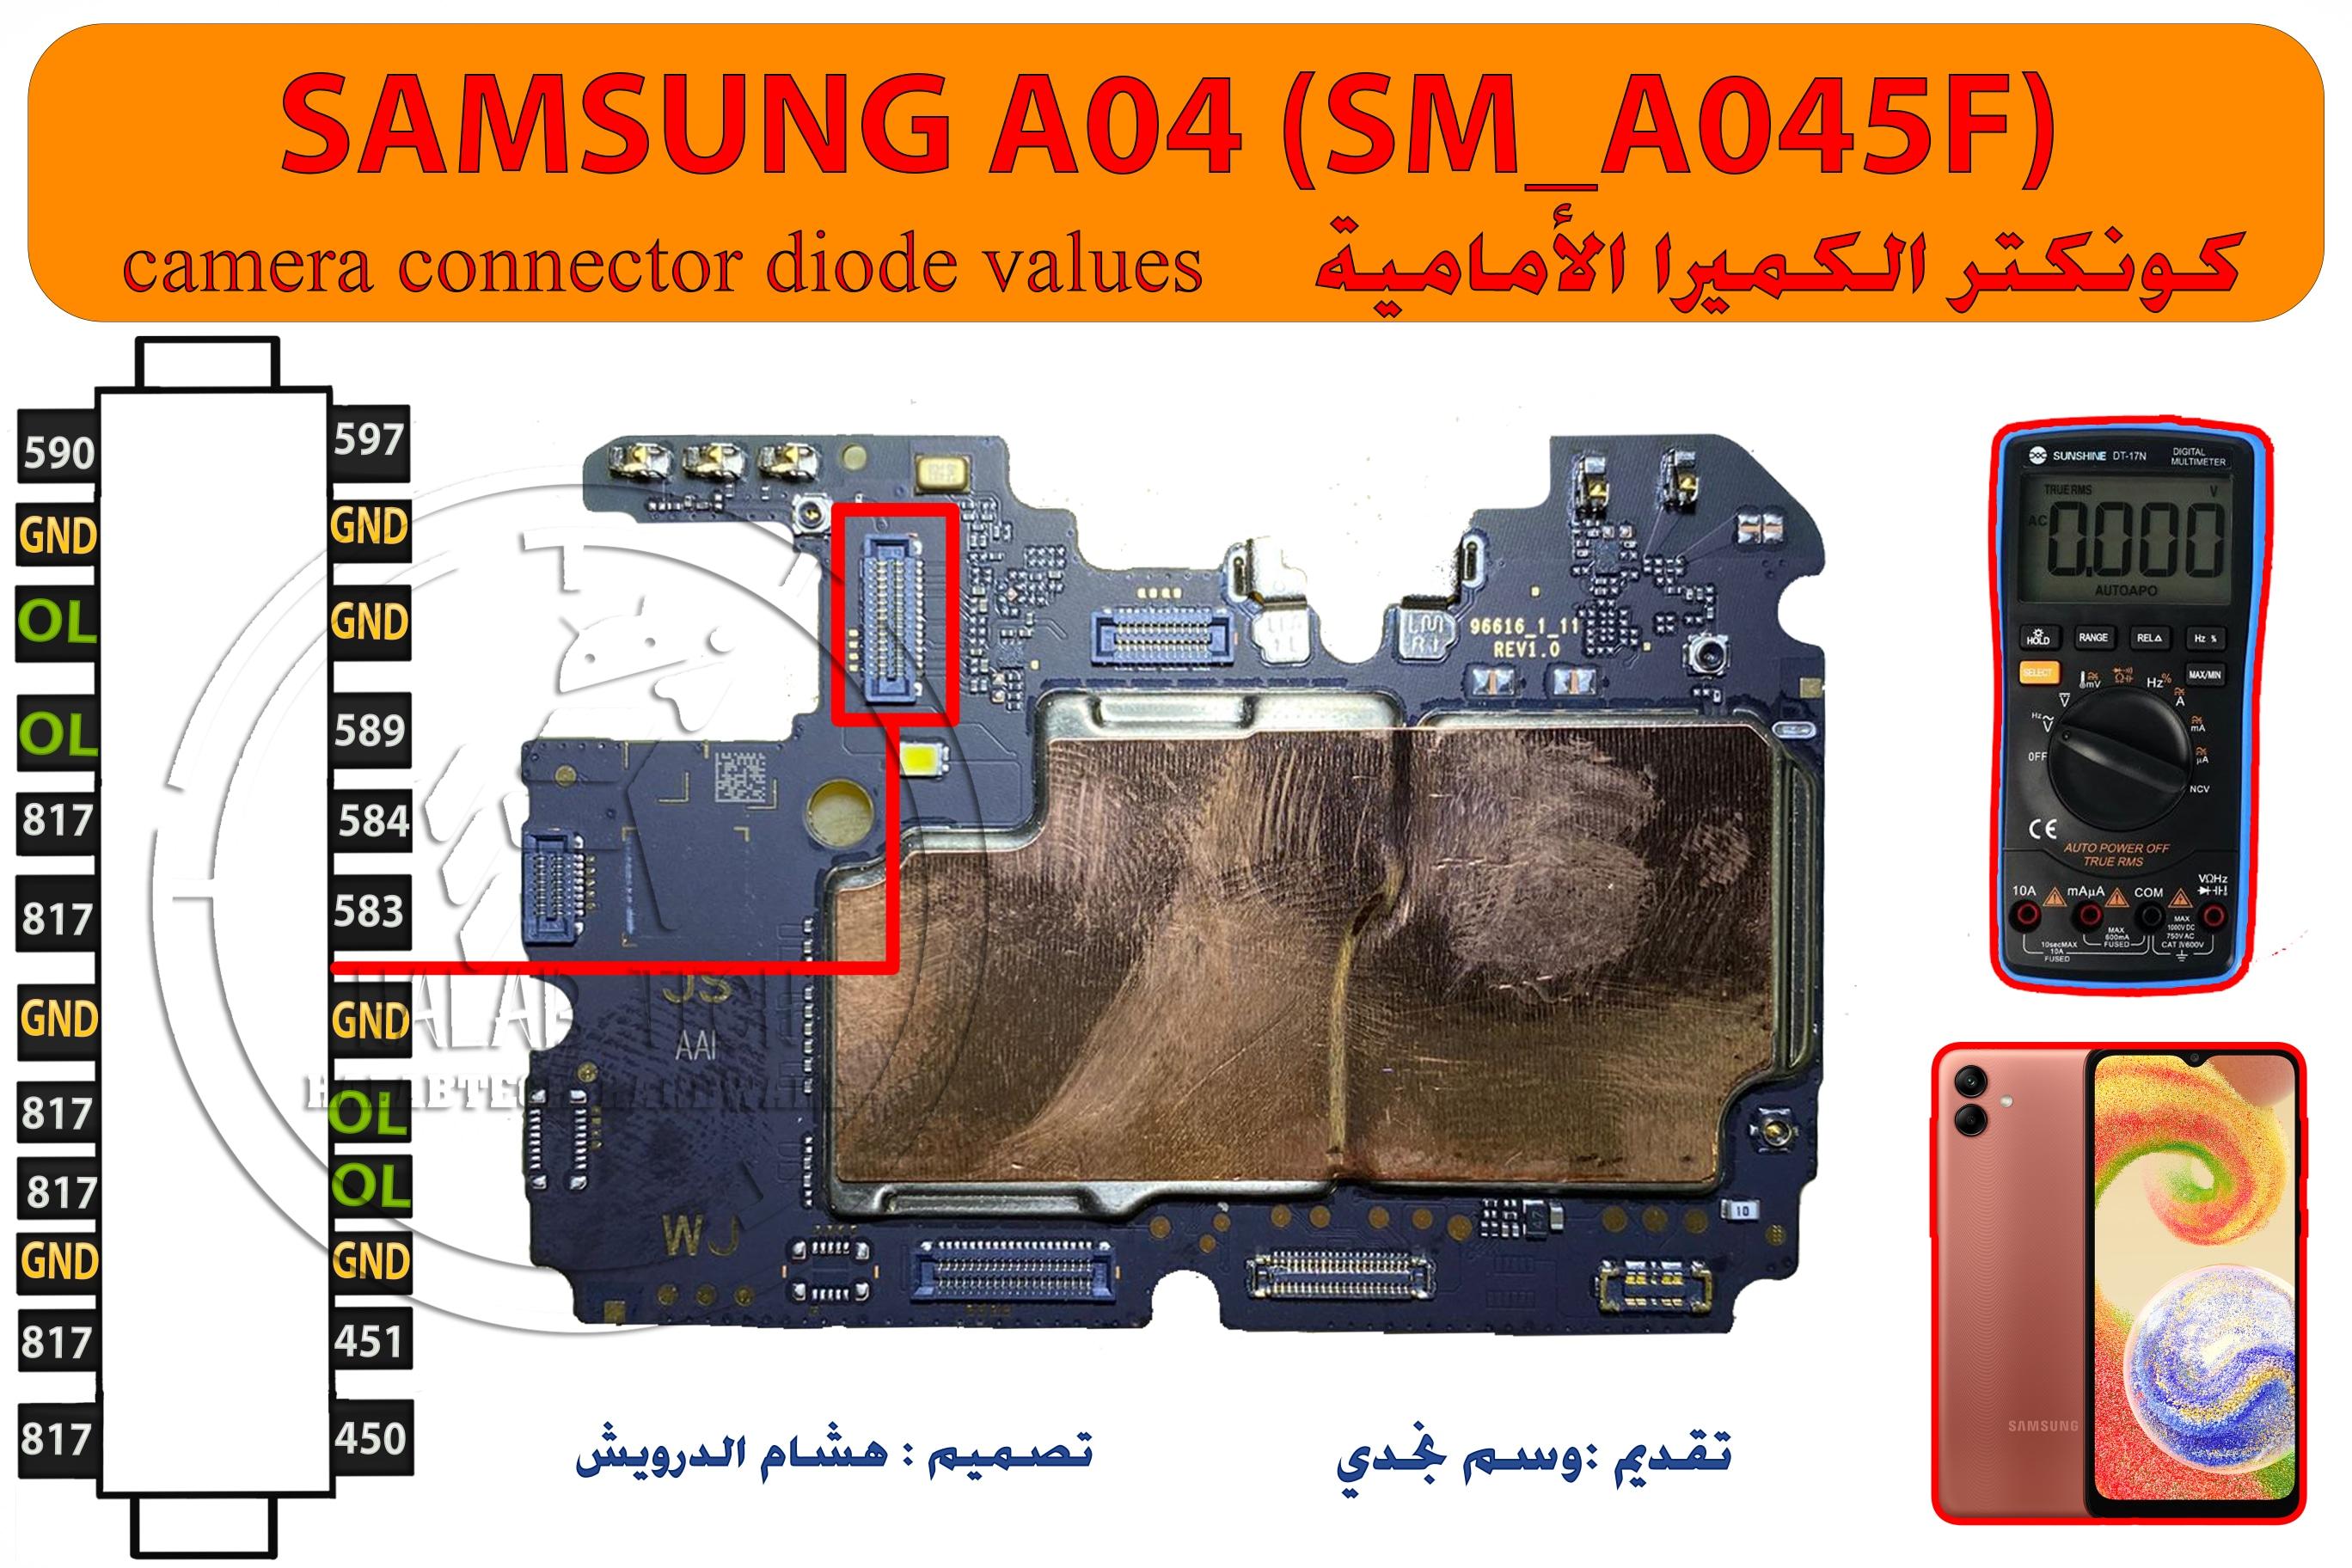 SamsungA04A045Ffrontcameraconnectordiodevalues.png.f00e3c457bd8849e14a0b067f6a8ce05.png